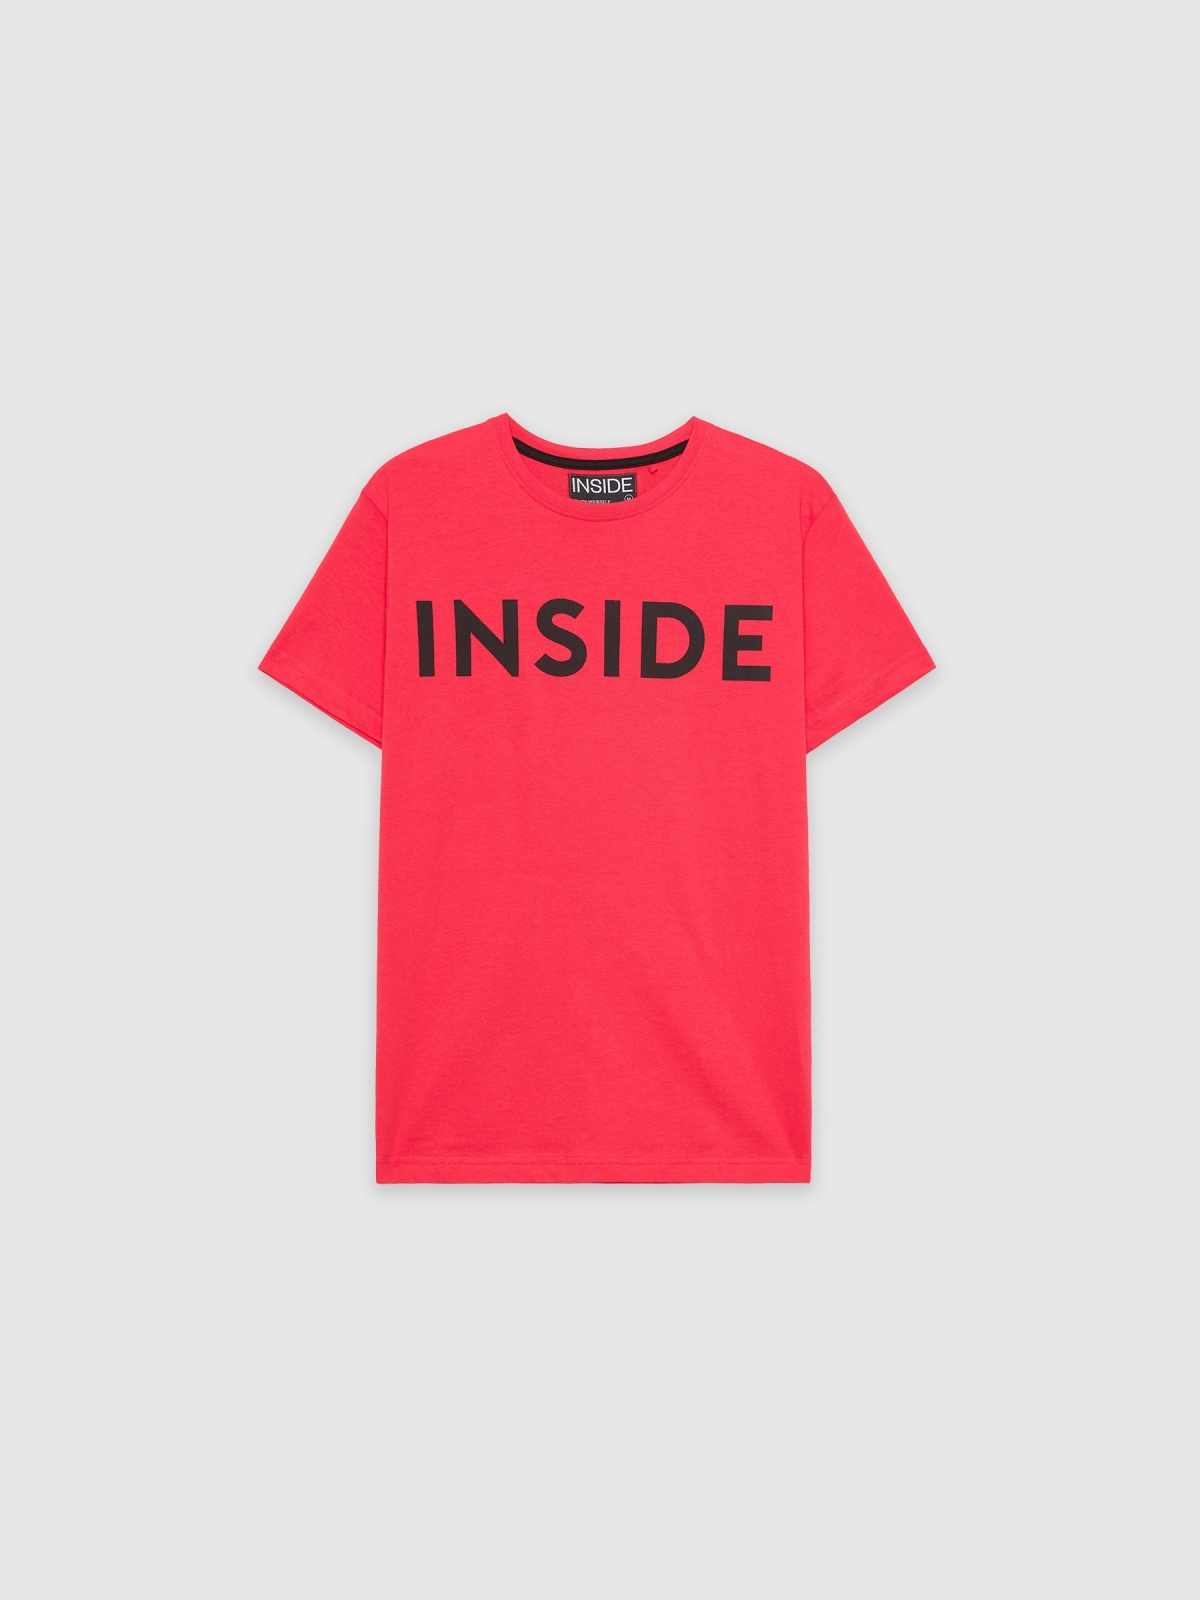  Camiseta básica "INSIDE" rojo